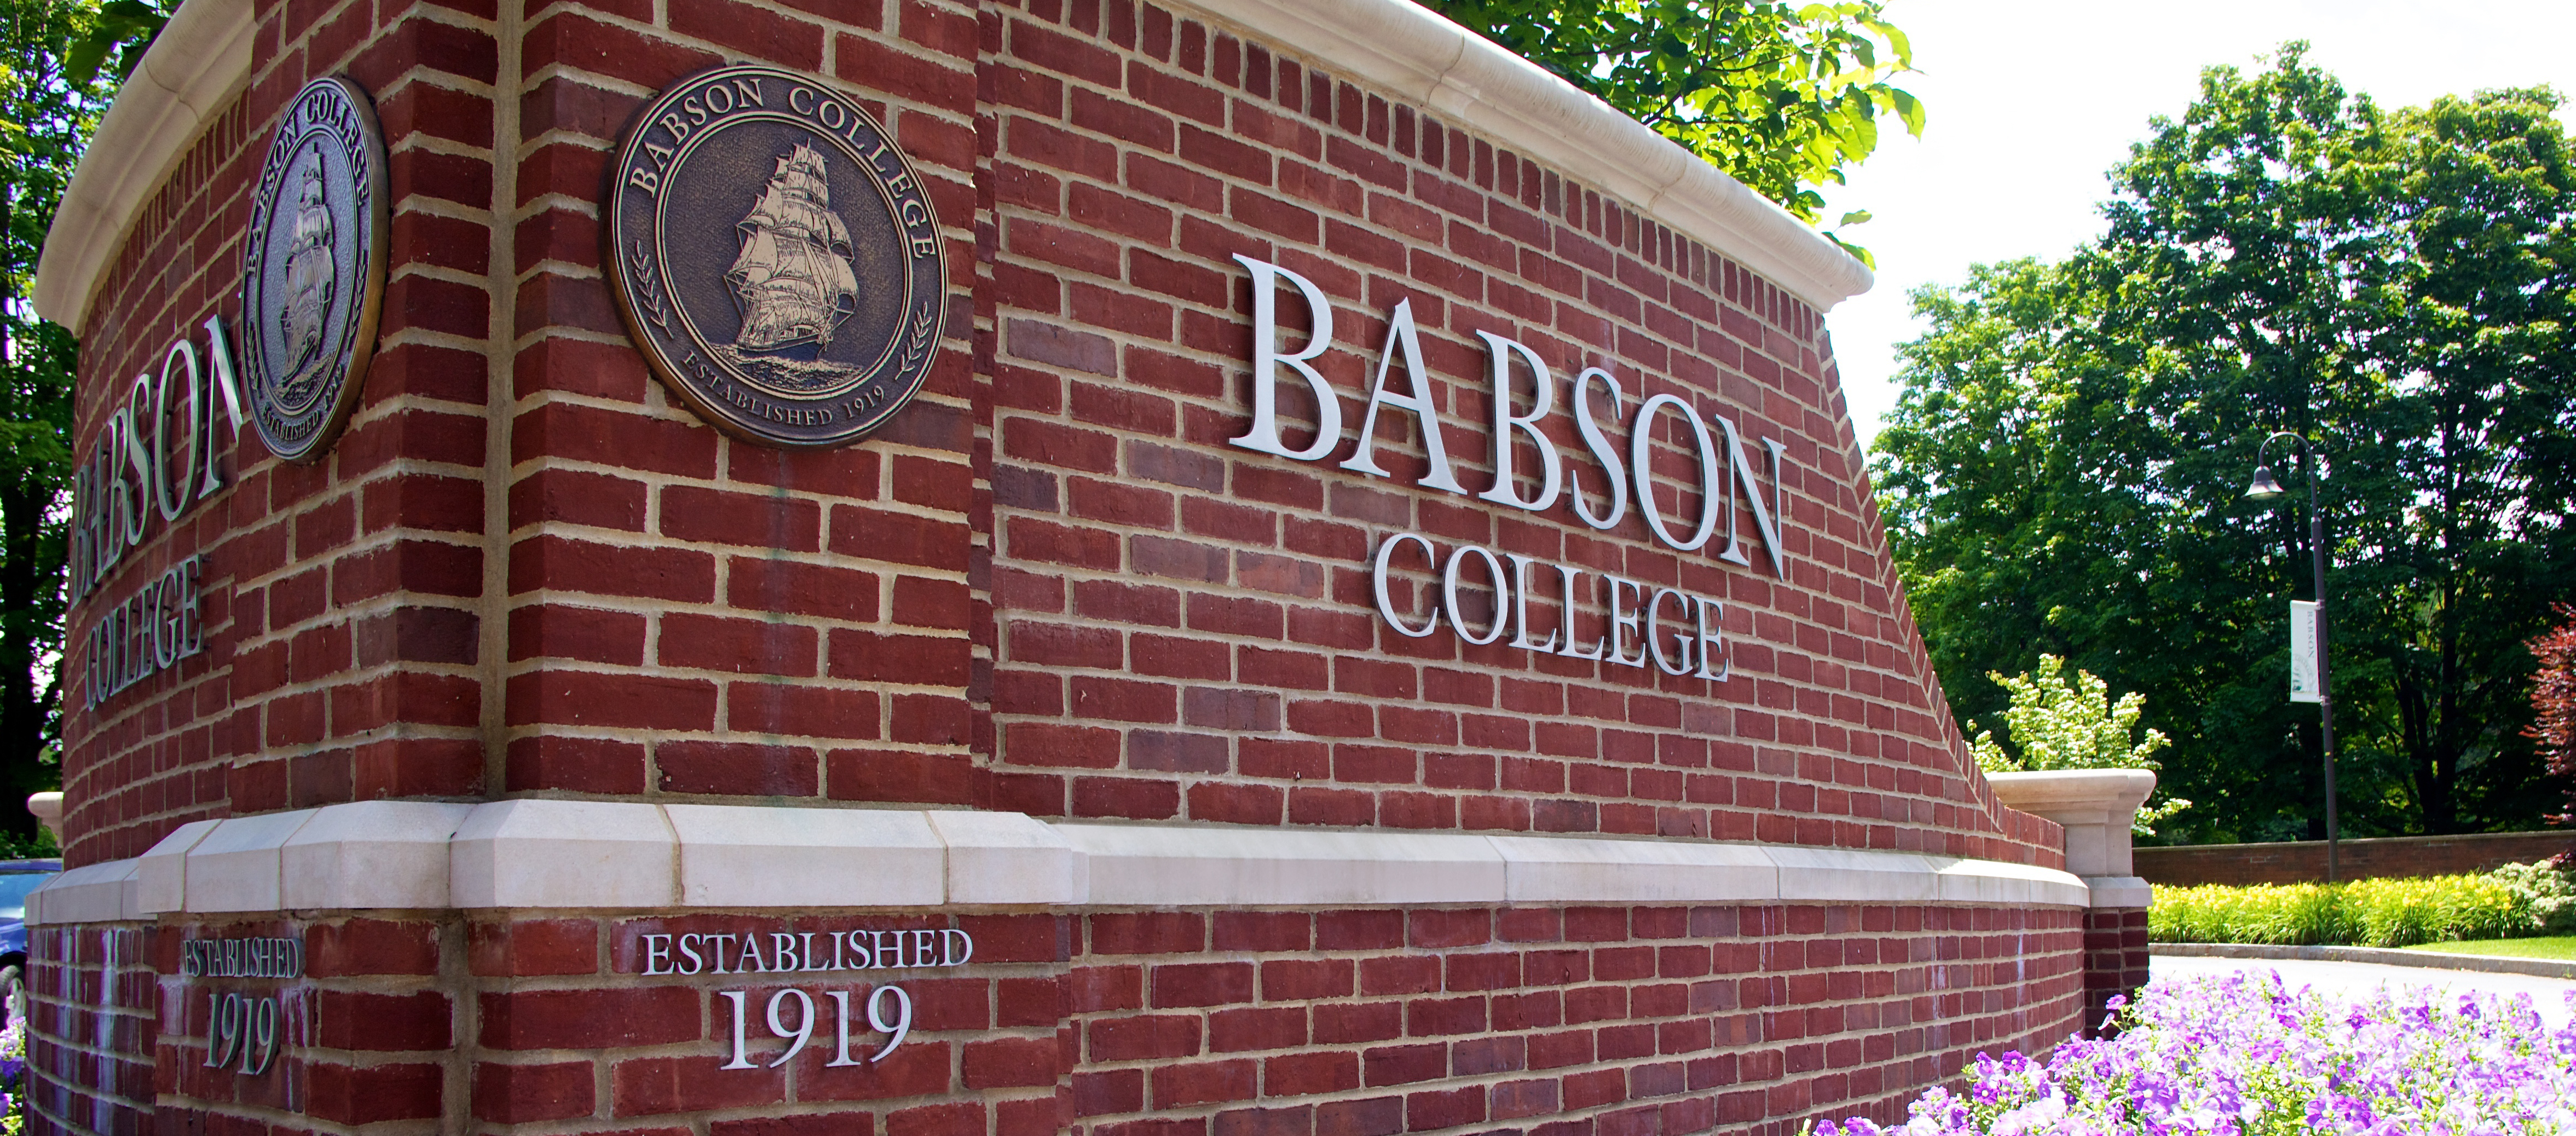 Babson entrance